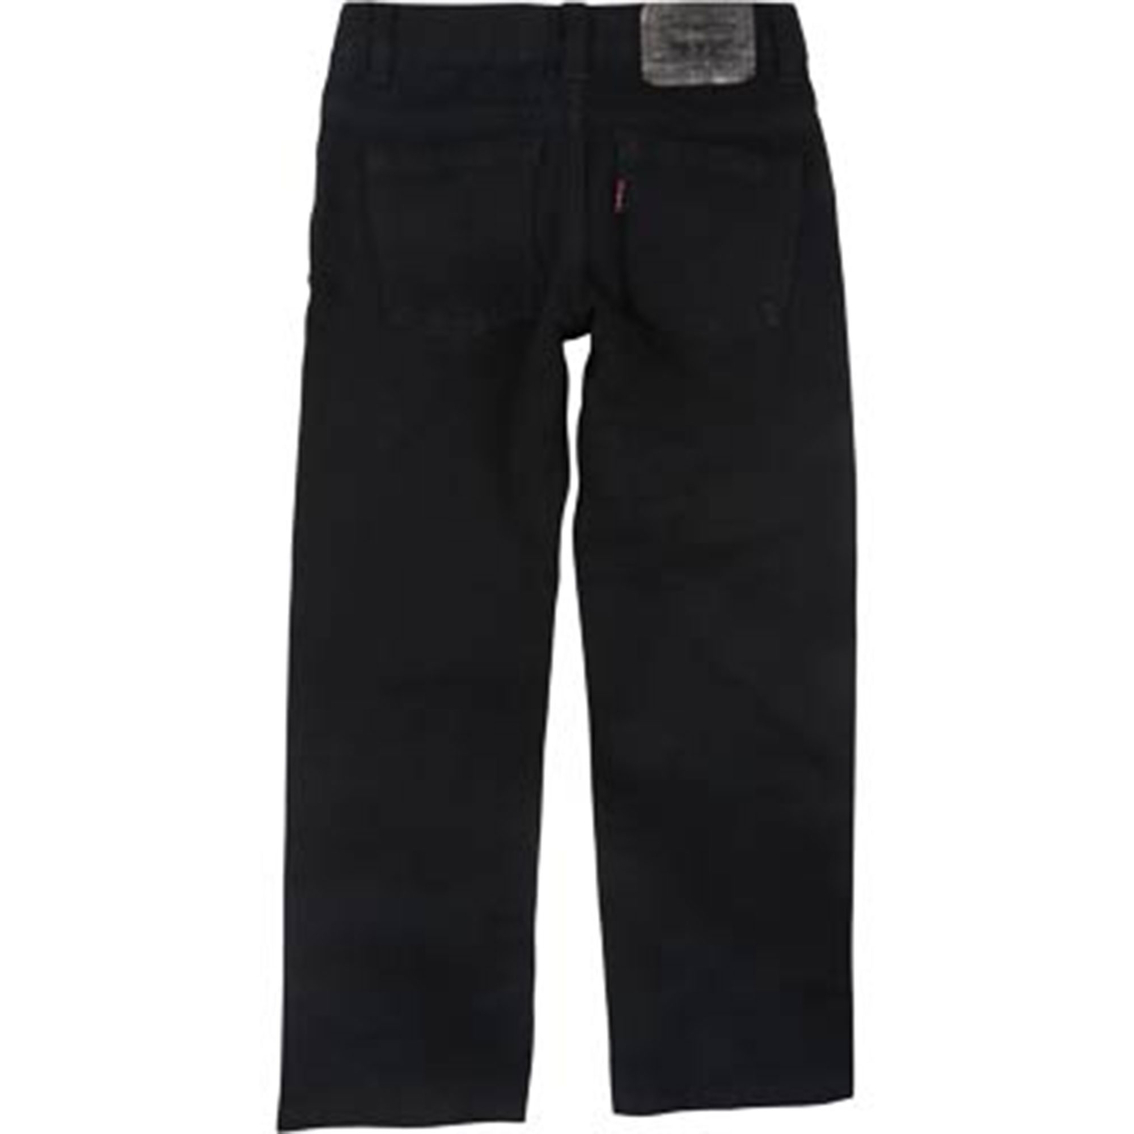 Levi's Boys 511 Skinny Jeans - Image 2 of 2